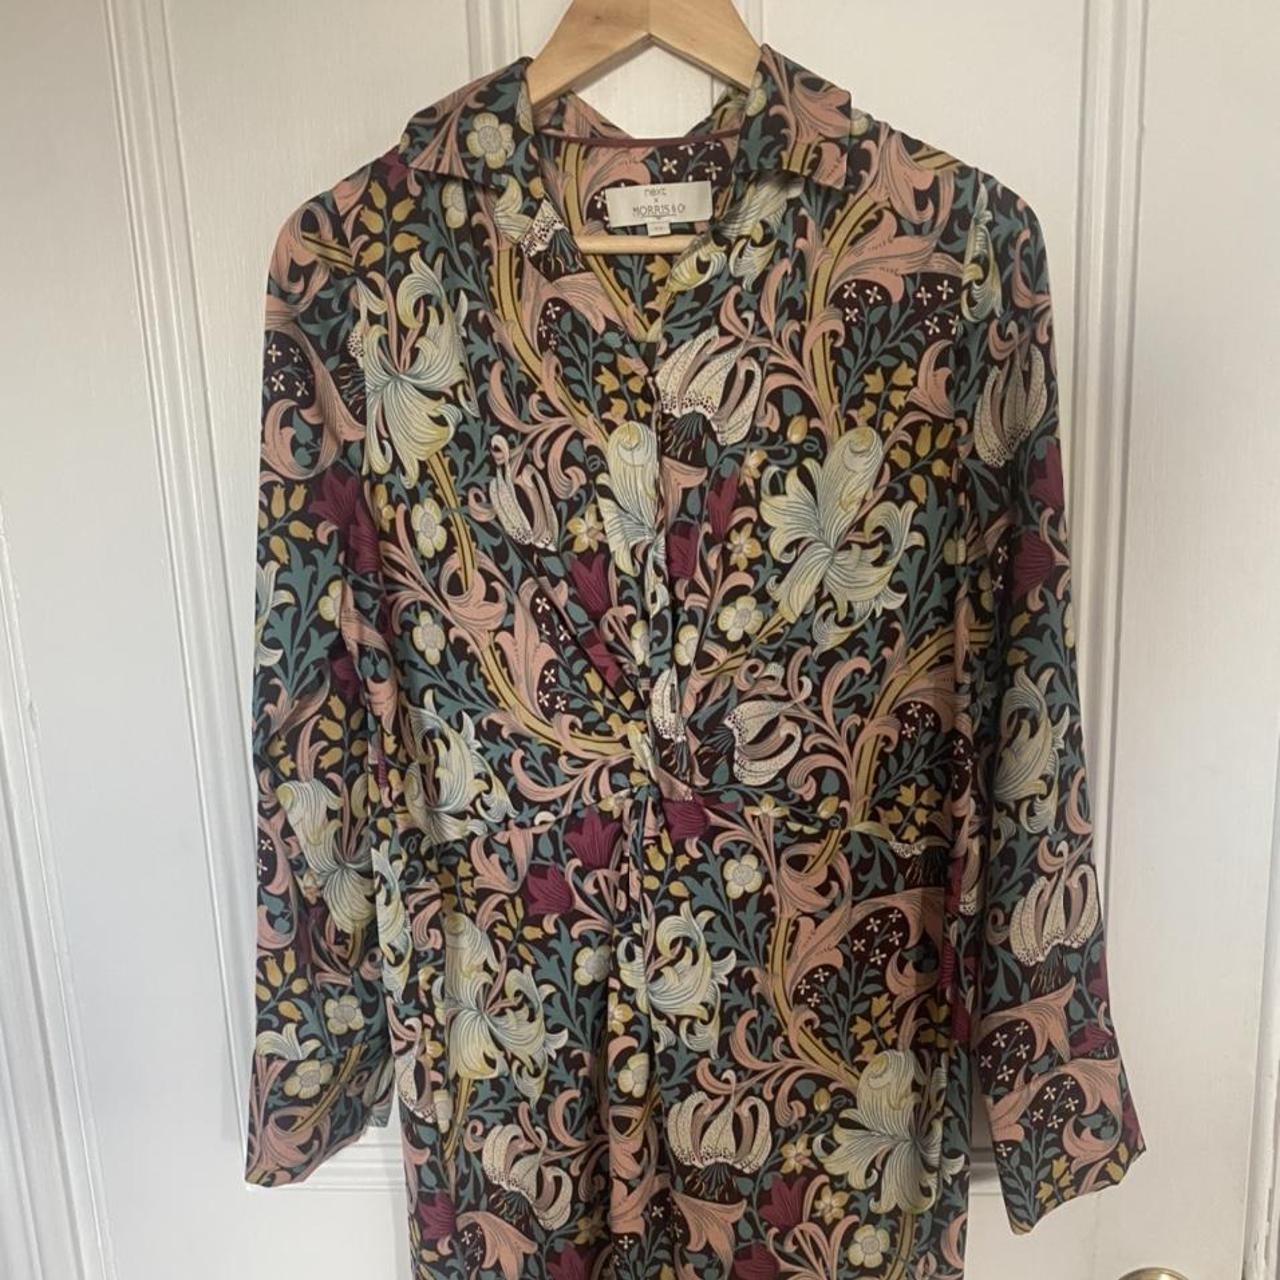 William Morris Print shirt dress,silky... - Depop